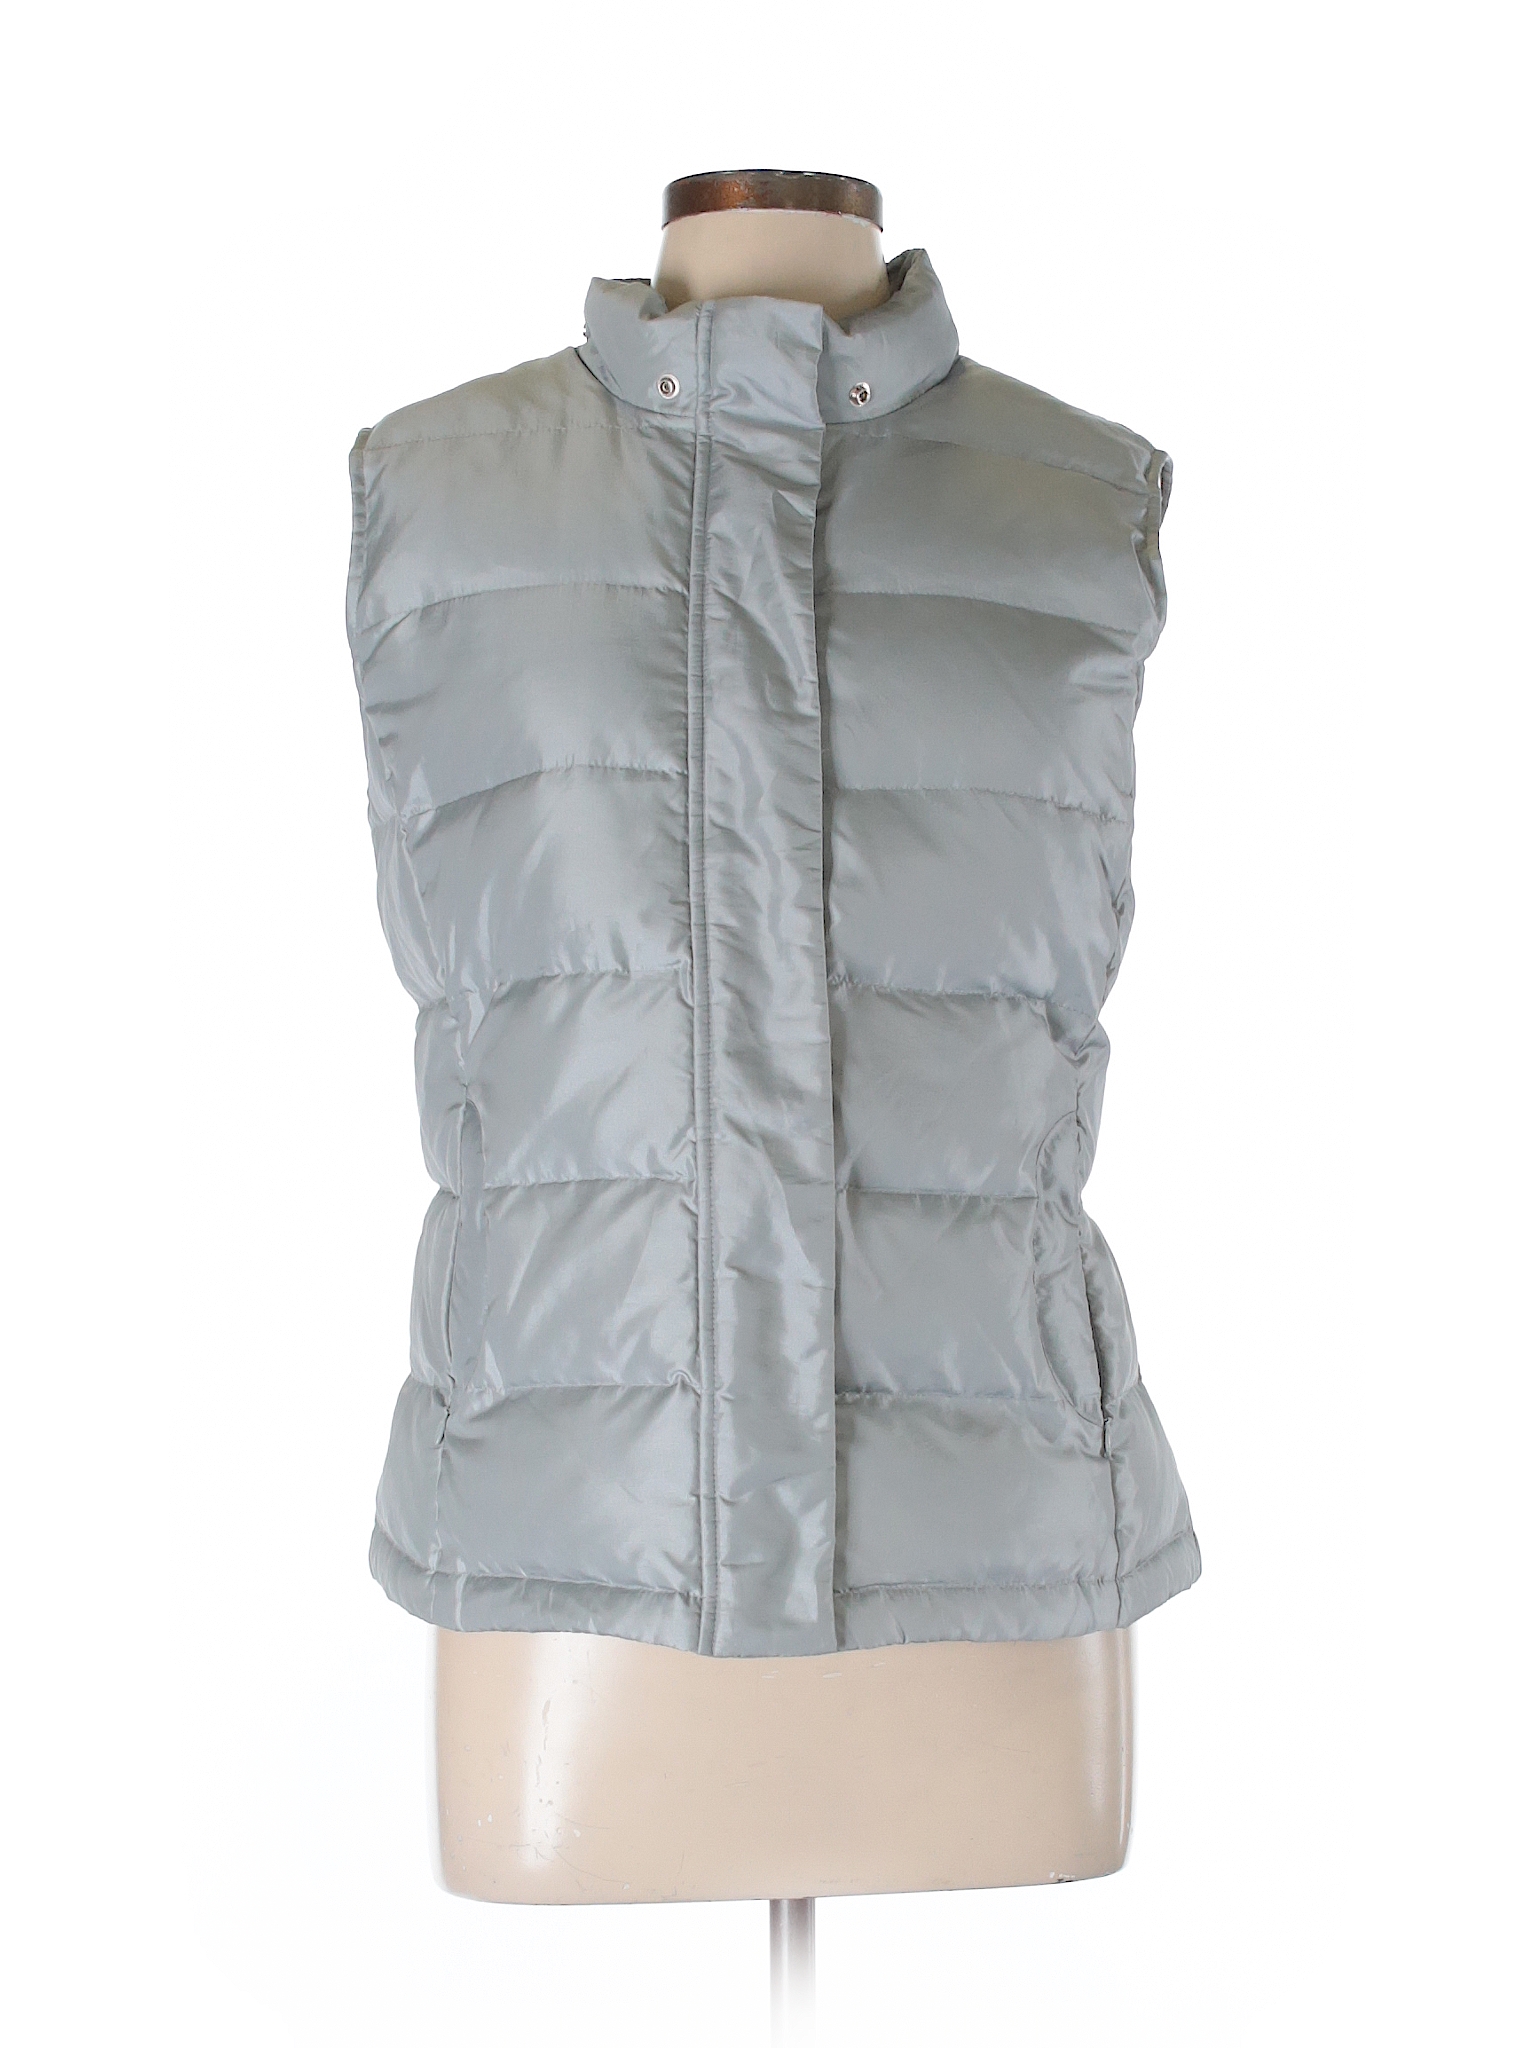 Talbots Solid Gray Vest Size L - 81% off | thredUP